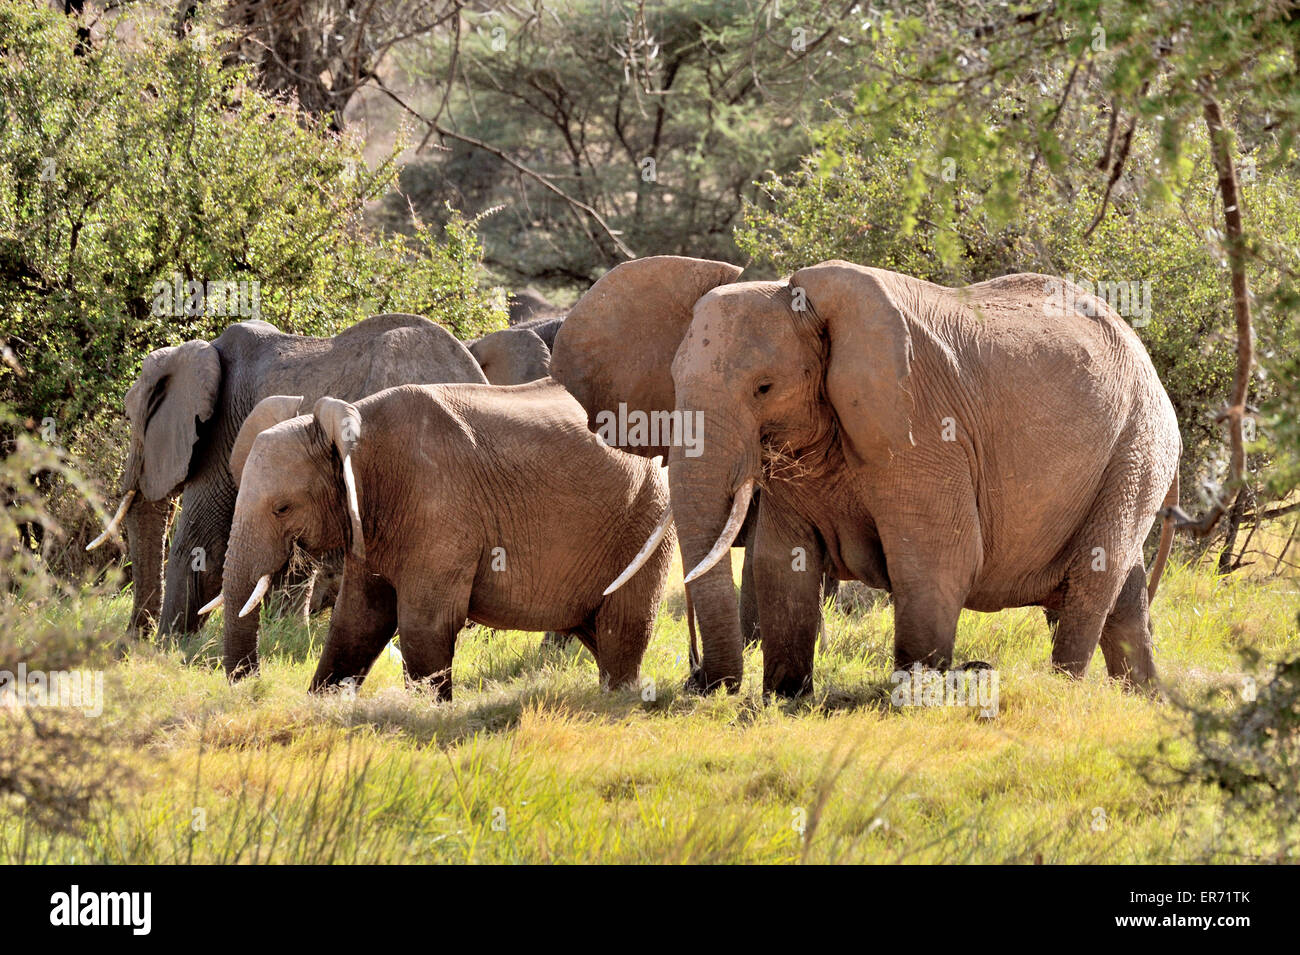 Family of elephants, group of elephants between green trees Stock Photo